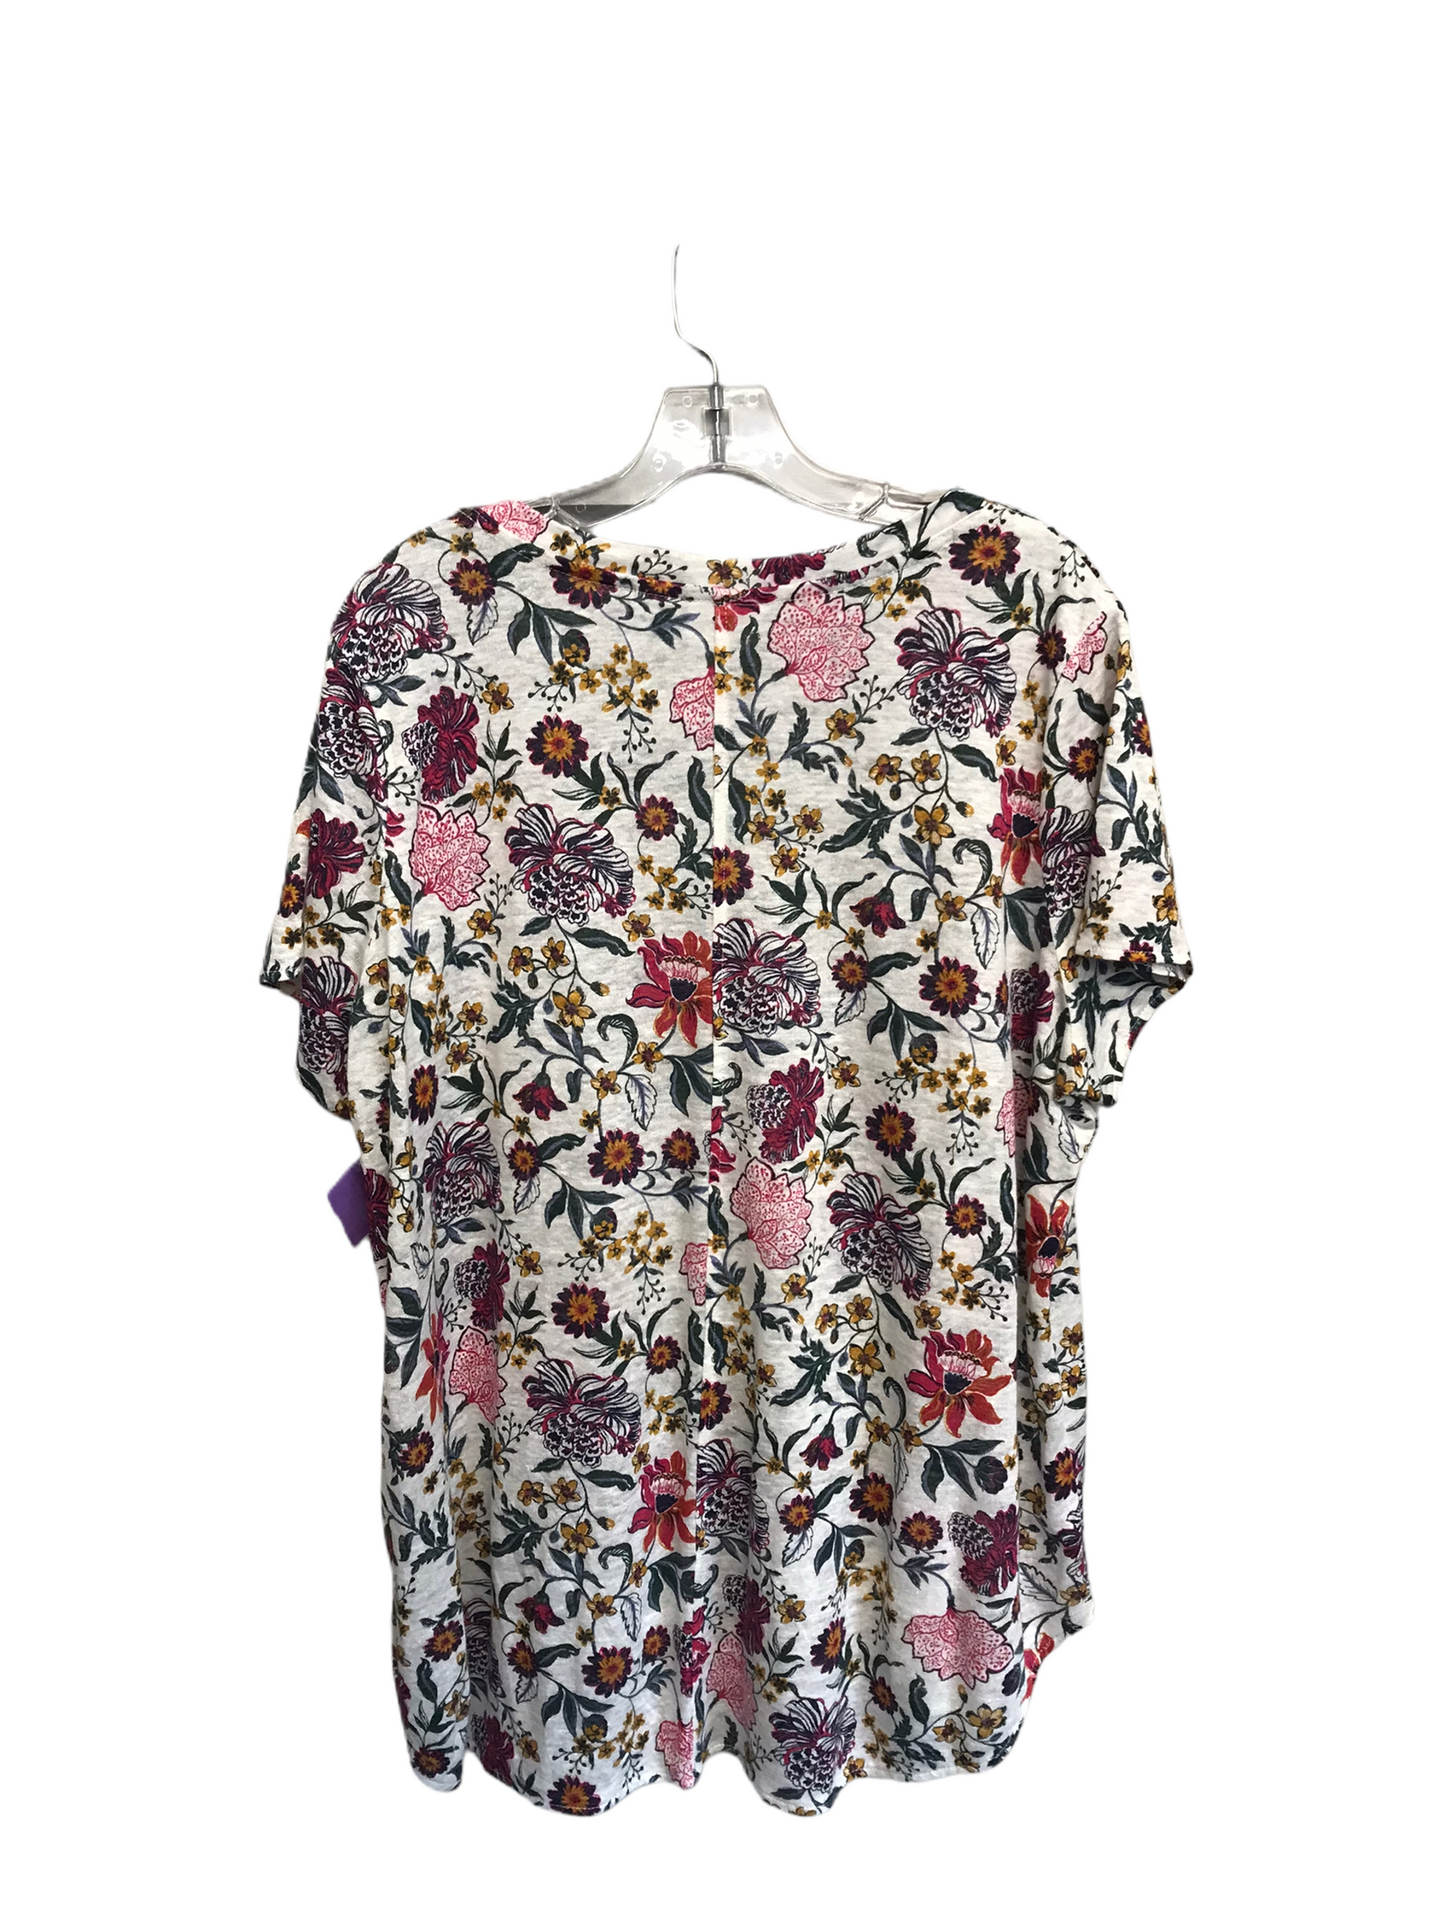 Floral Print Top Short Sleeve By Rachel Zoe, Size: 1x